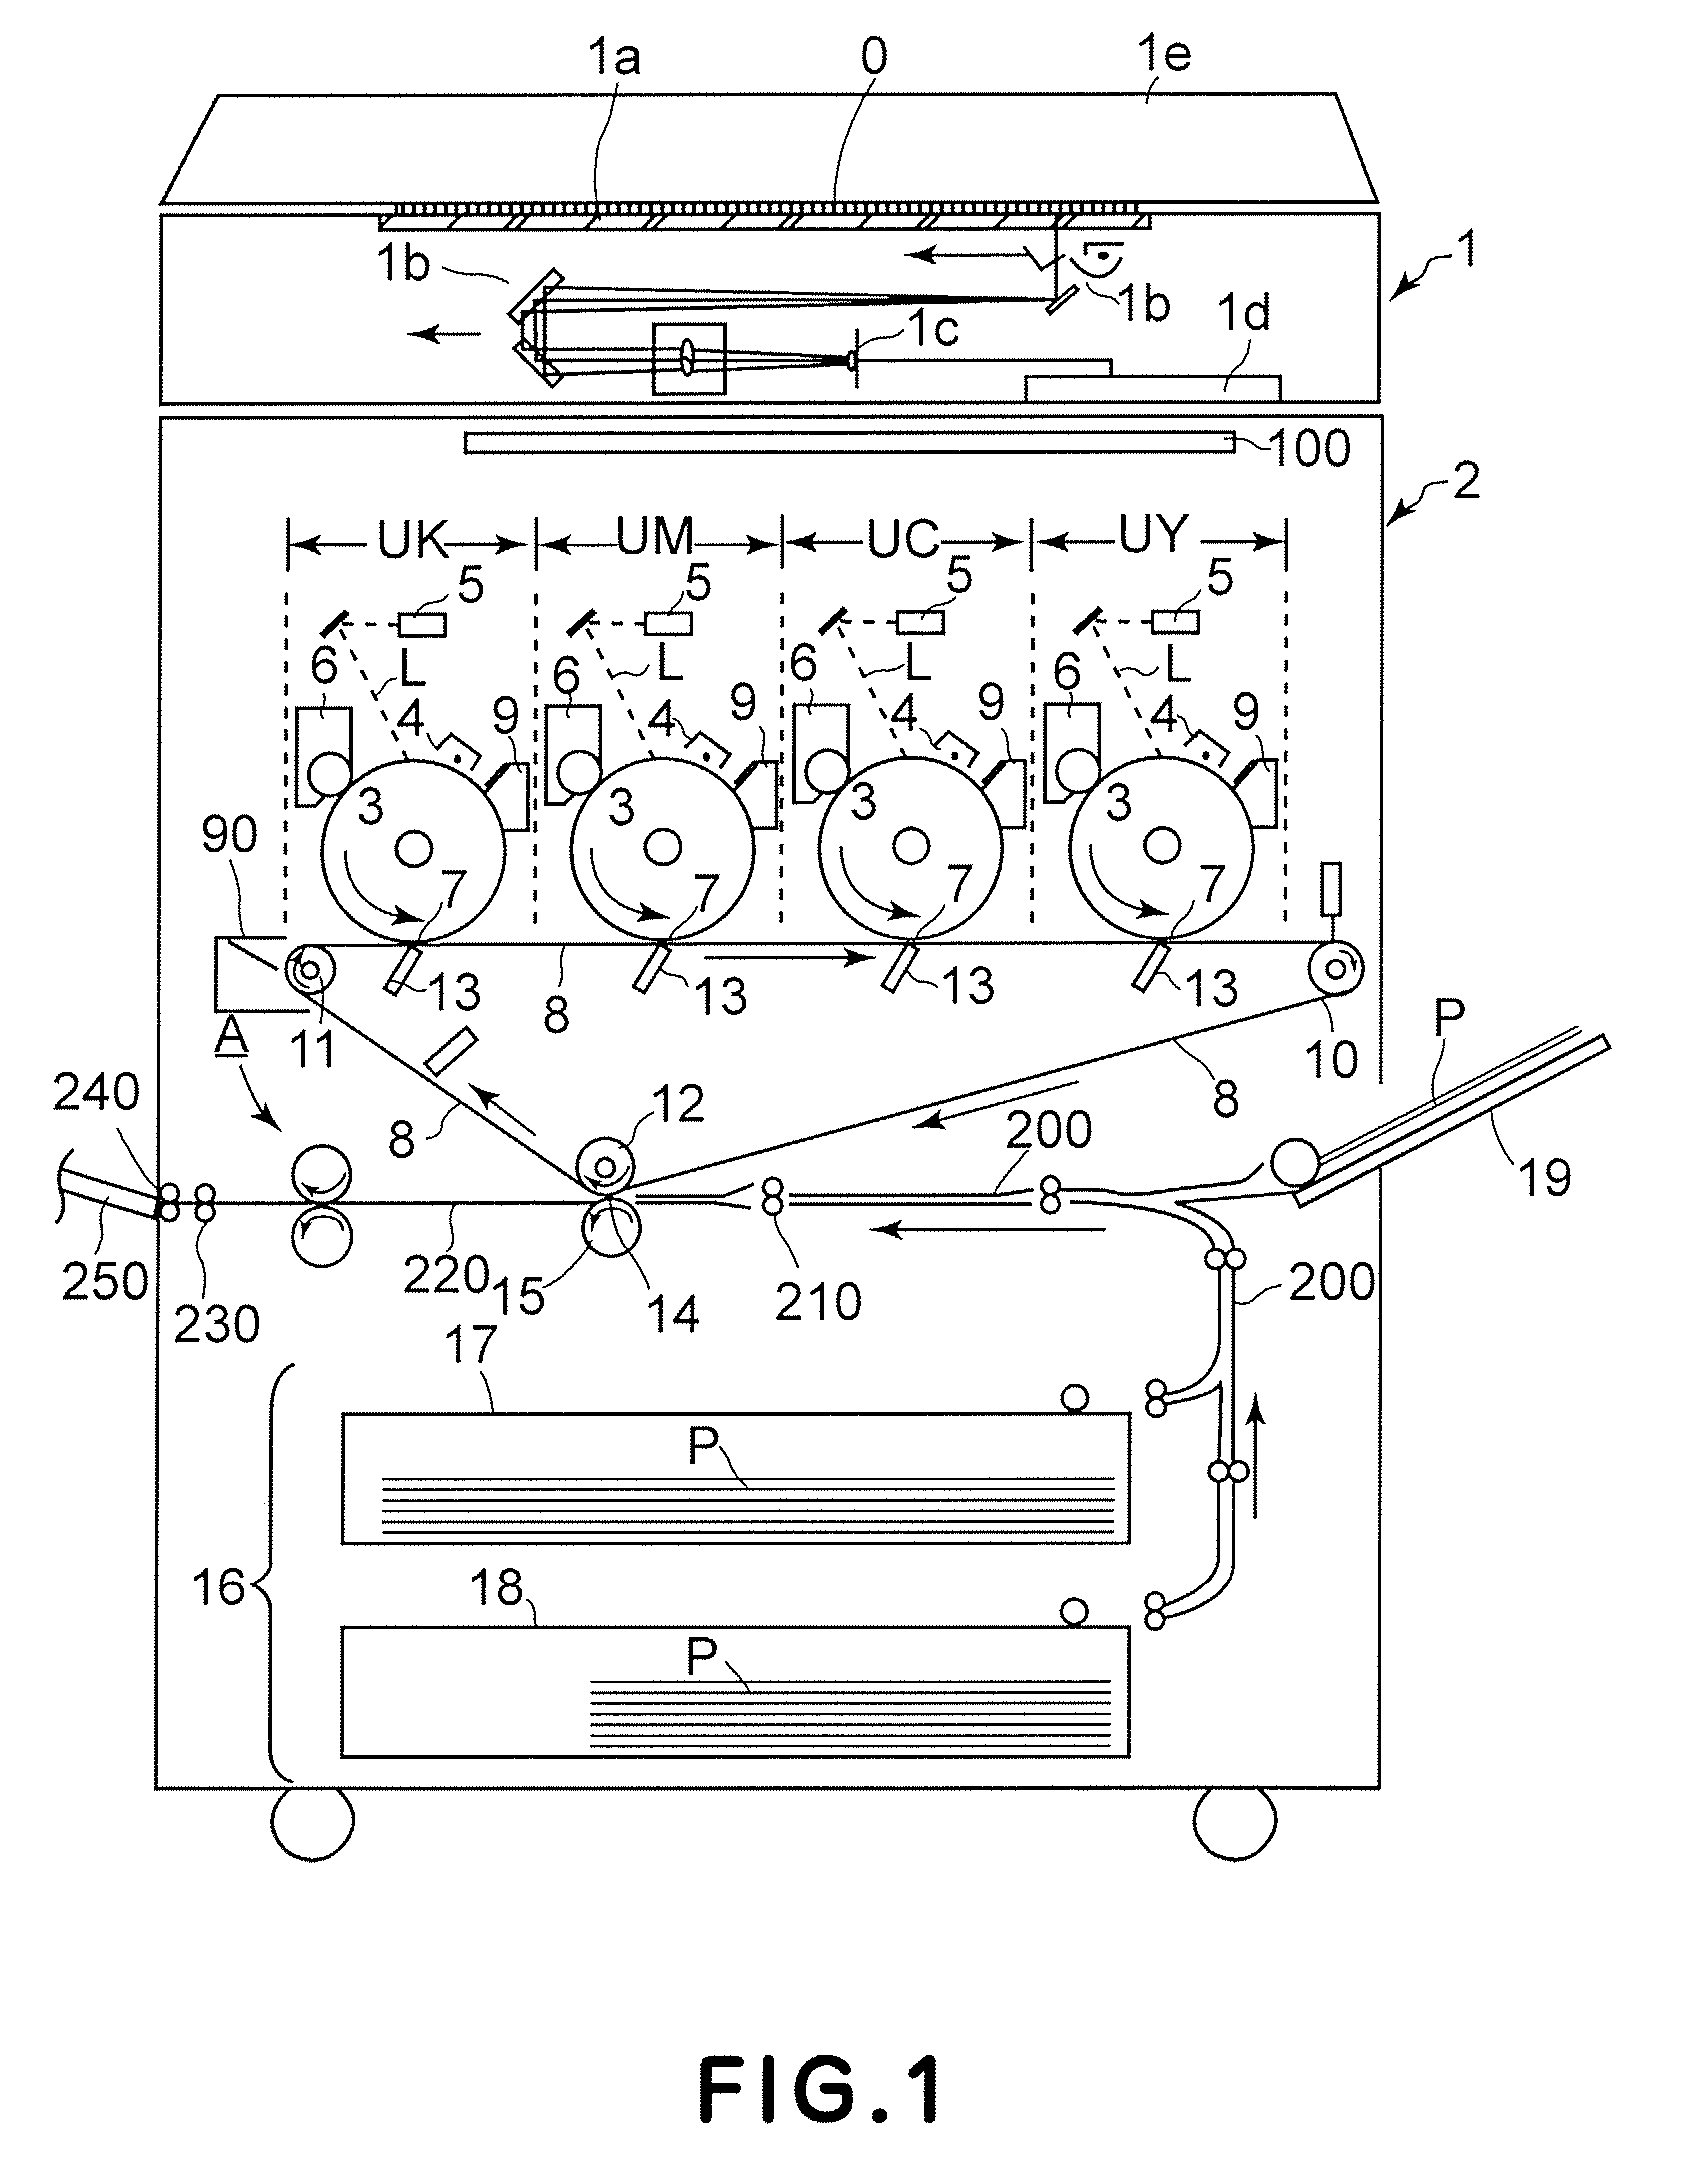 Image heating apparatus and image forming apparatus